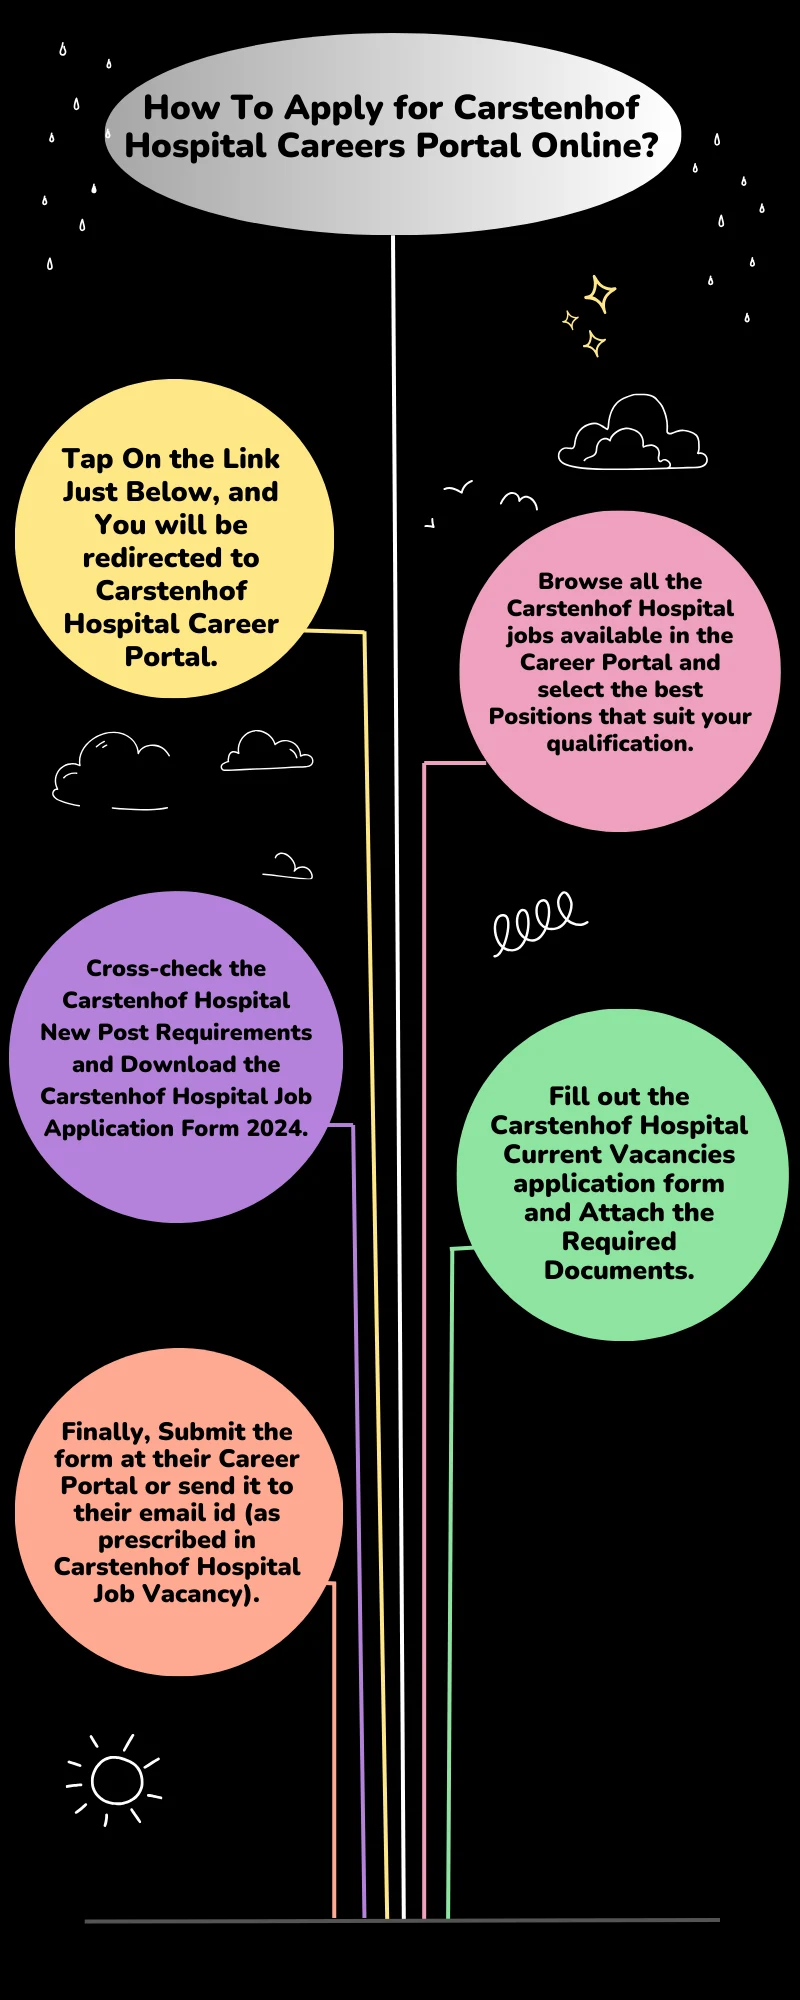 How To Apply for Carstenhof Hospital Careers Portal Online?